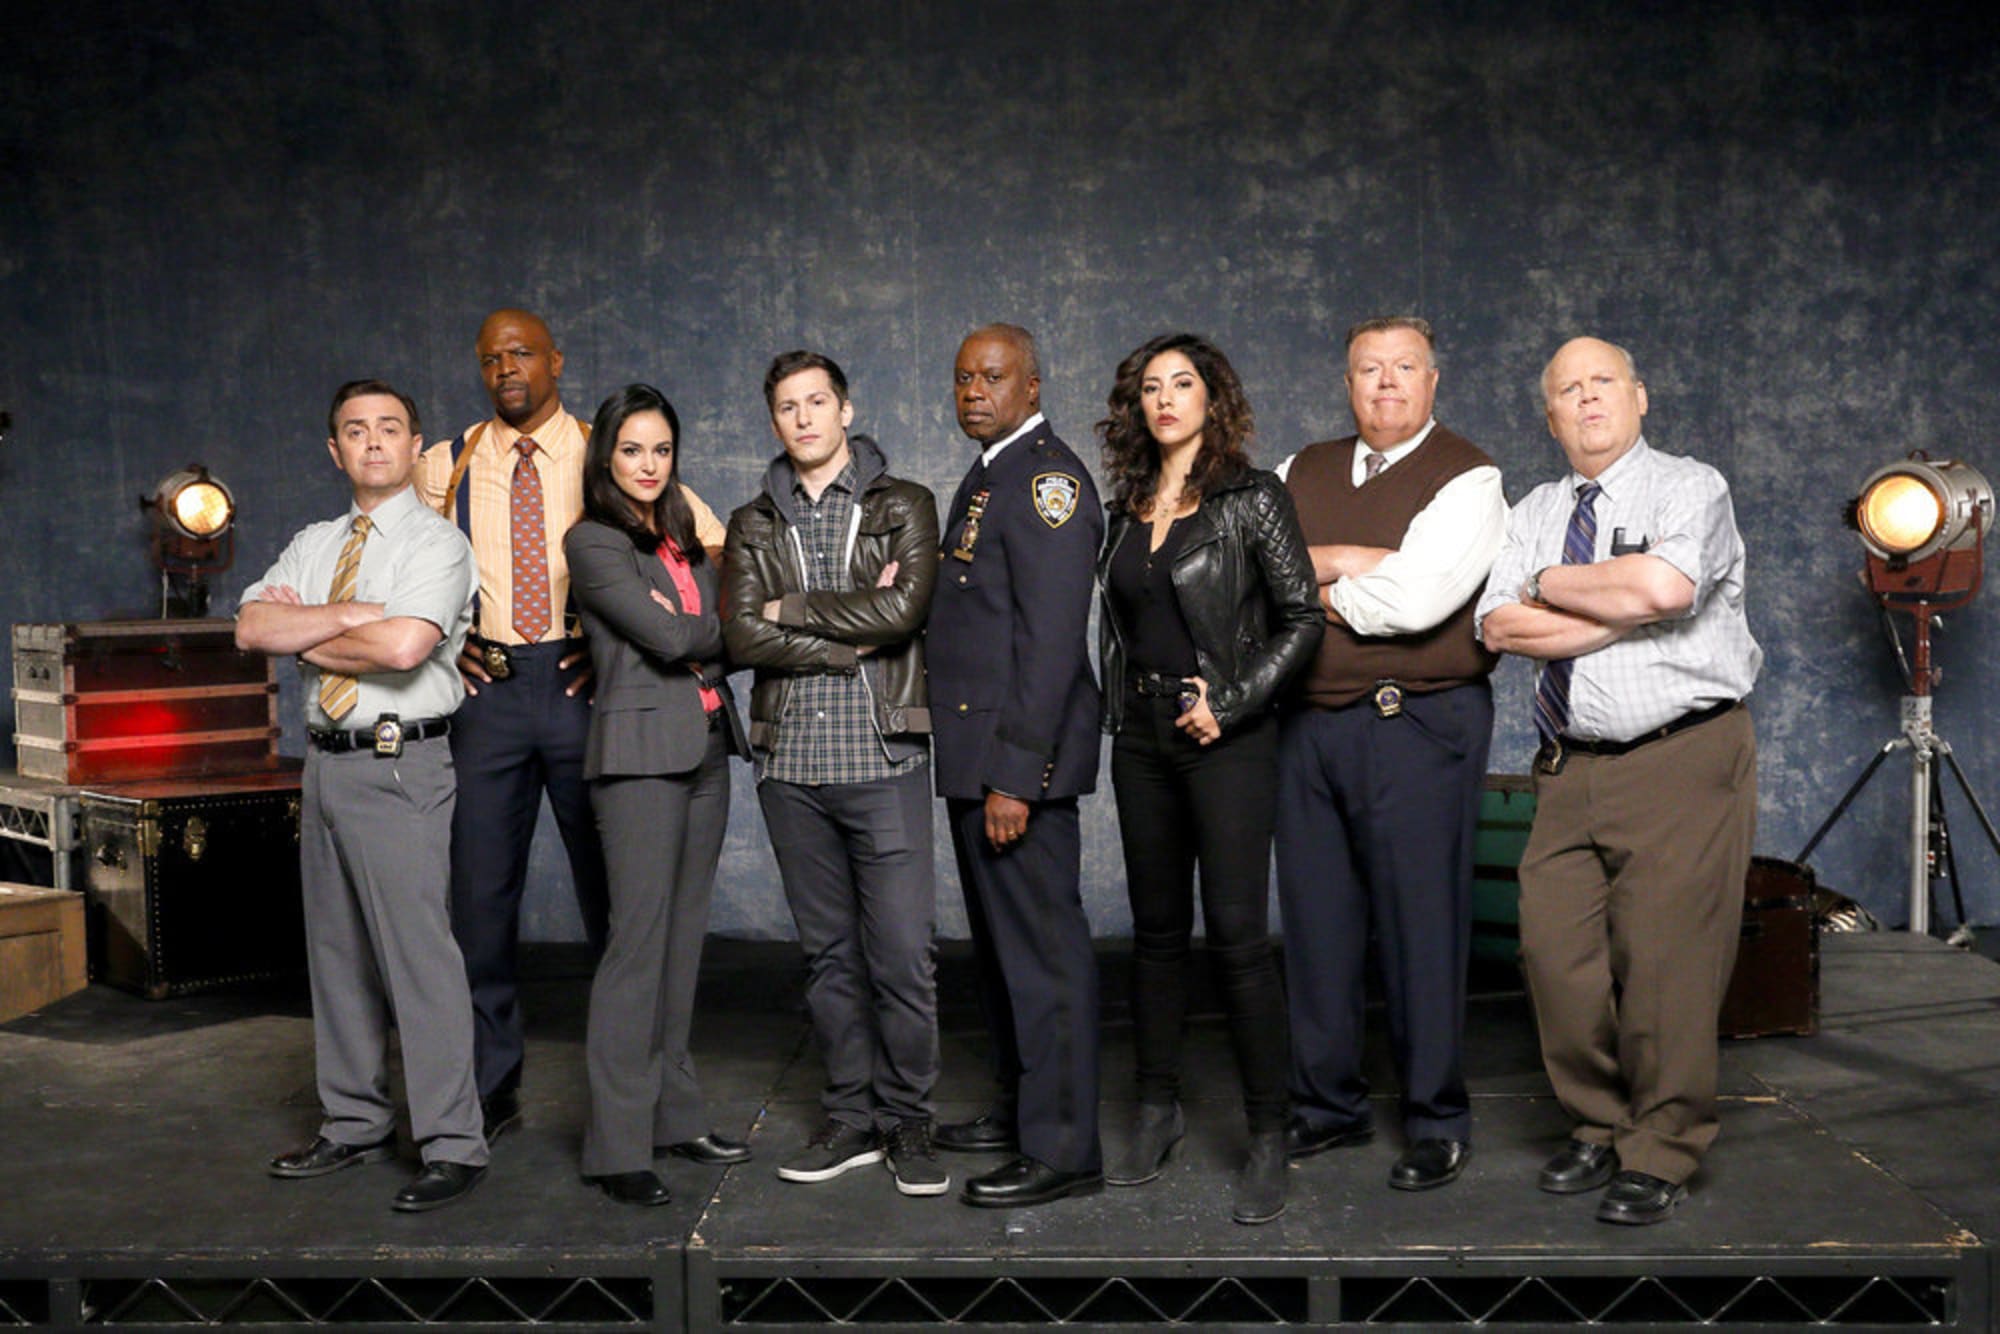 Brooklyn Nine-Nine Season 6: The Bimbo review and MVP